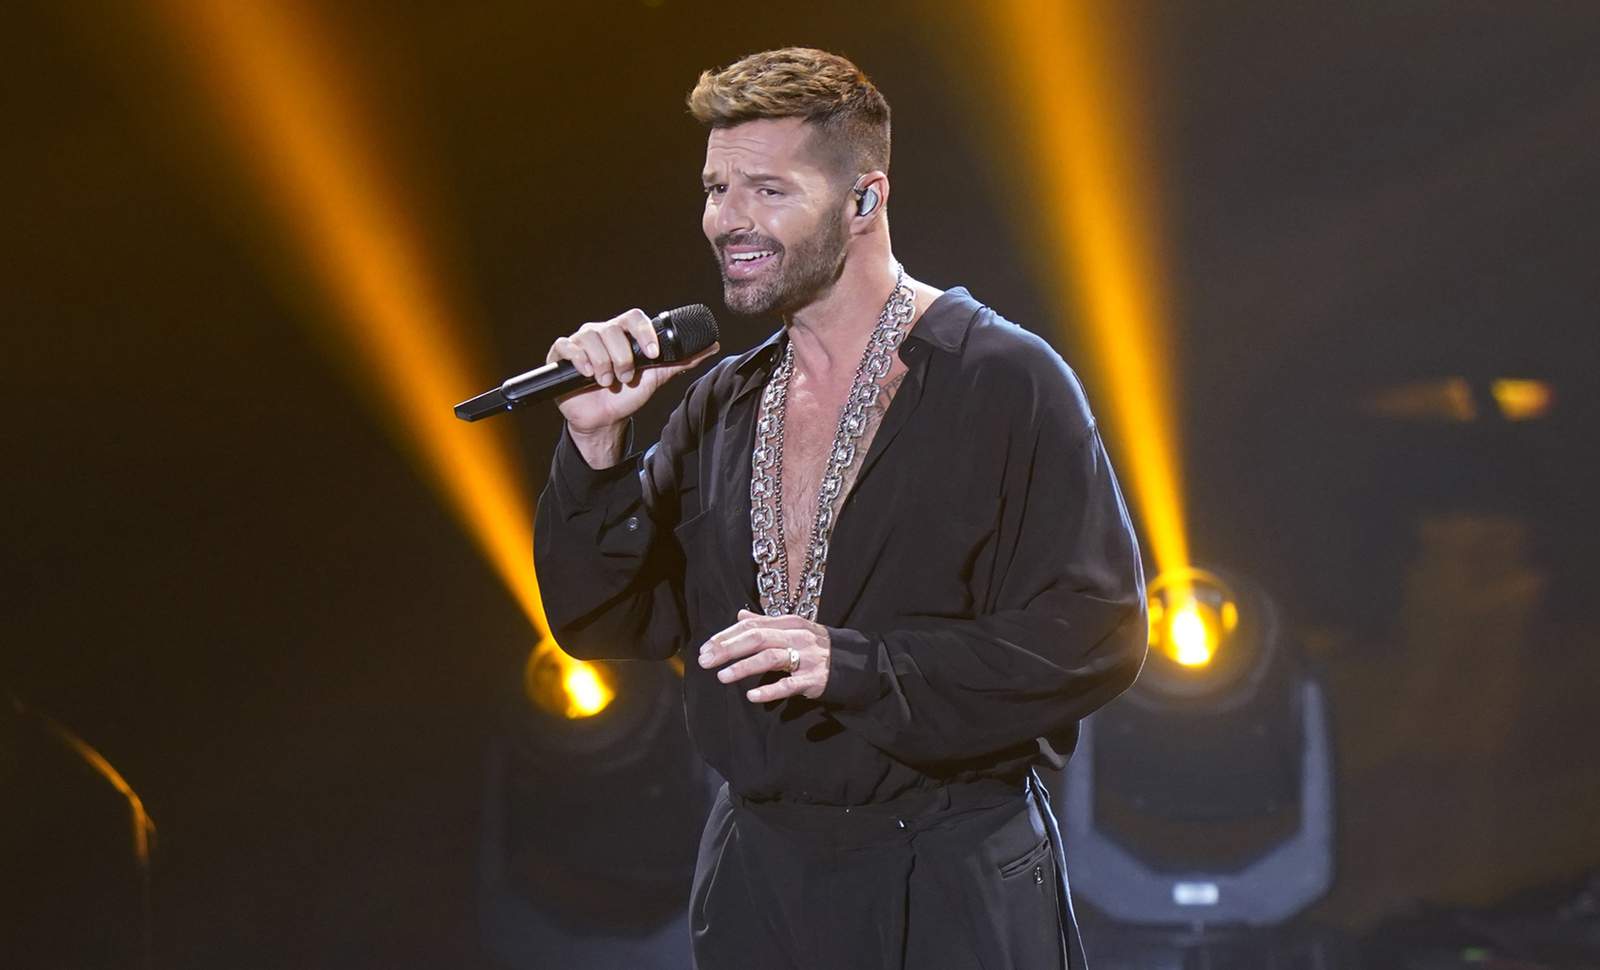 Singer Ricky Martin joins efforts to build Pulse memorial